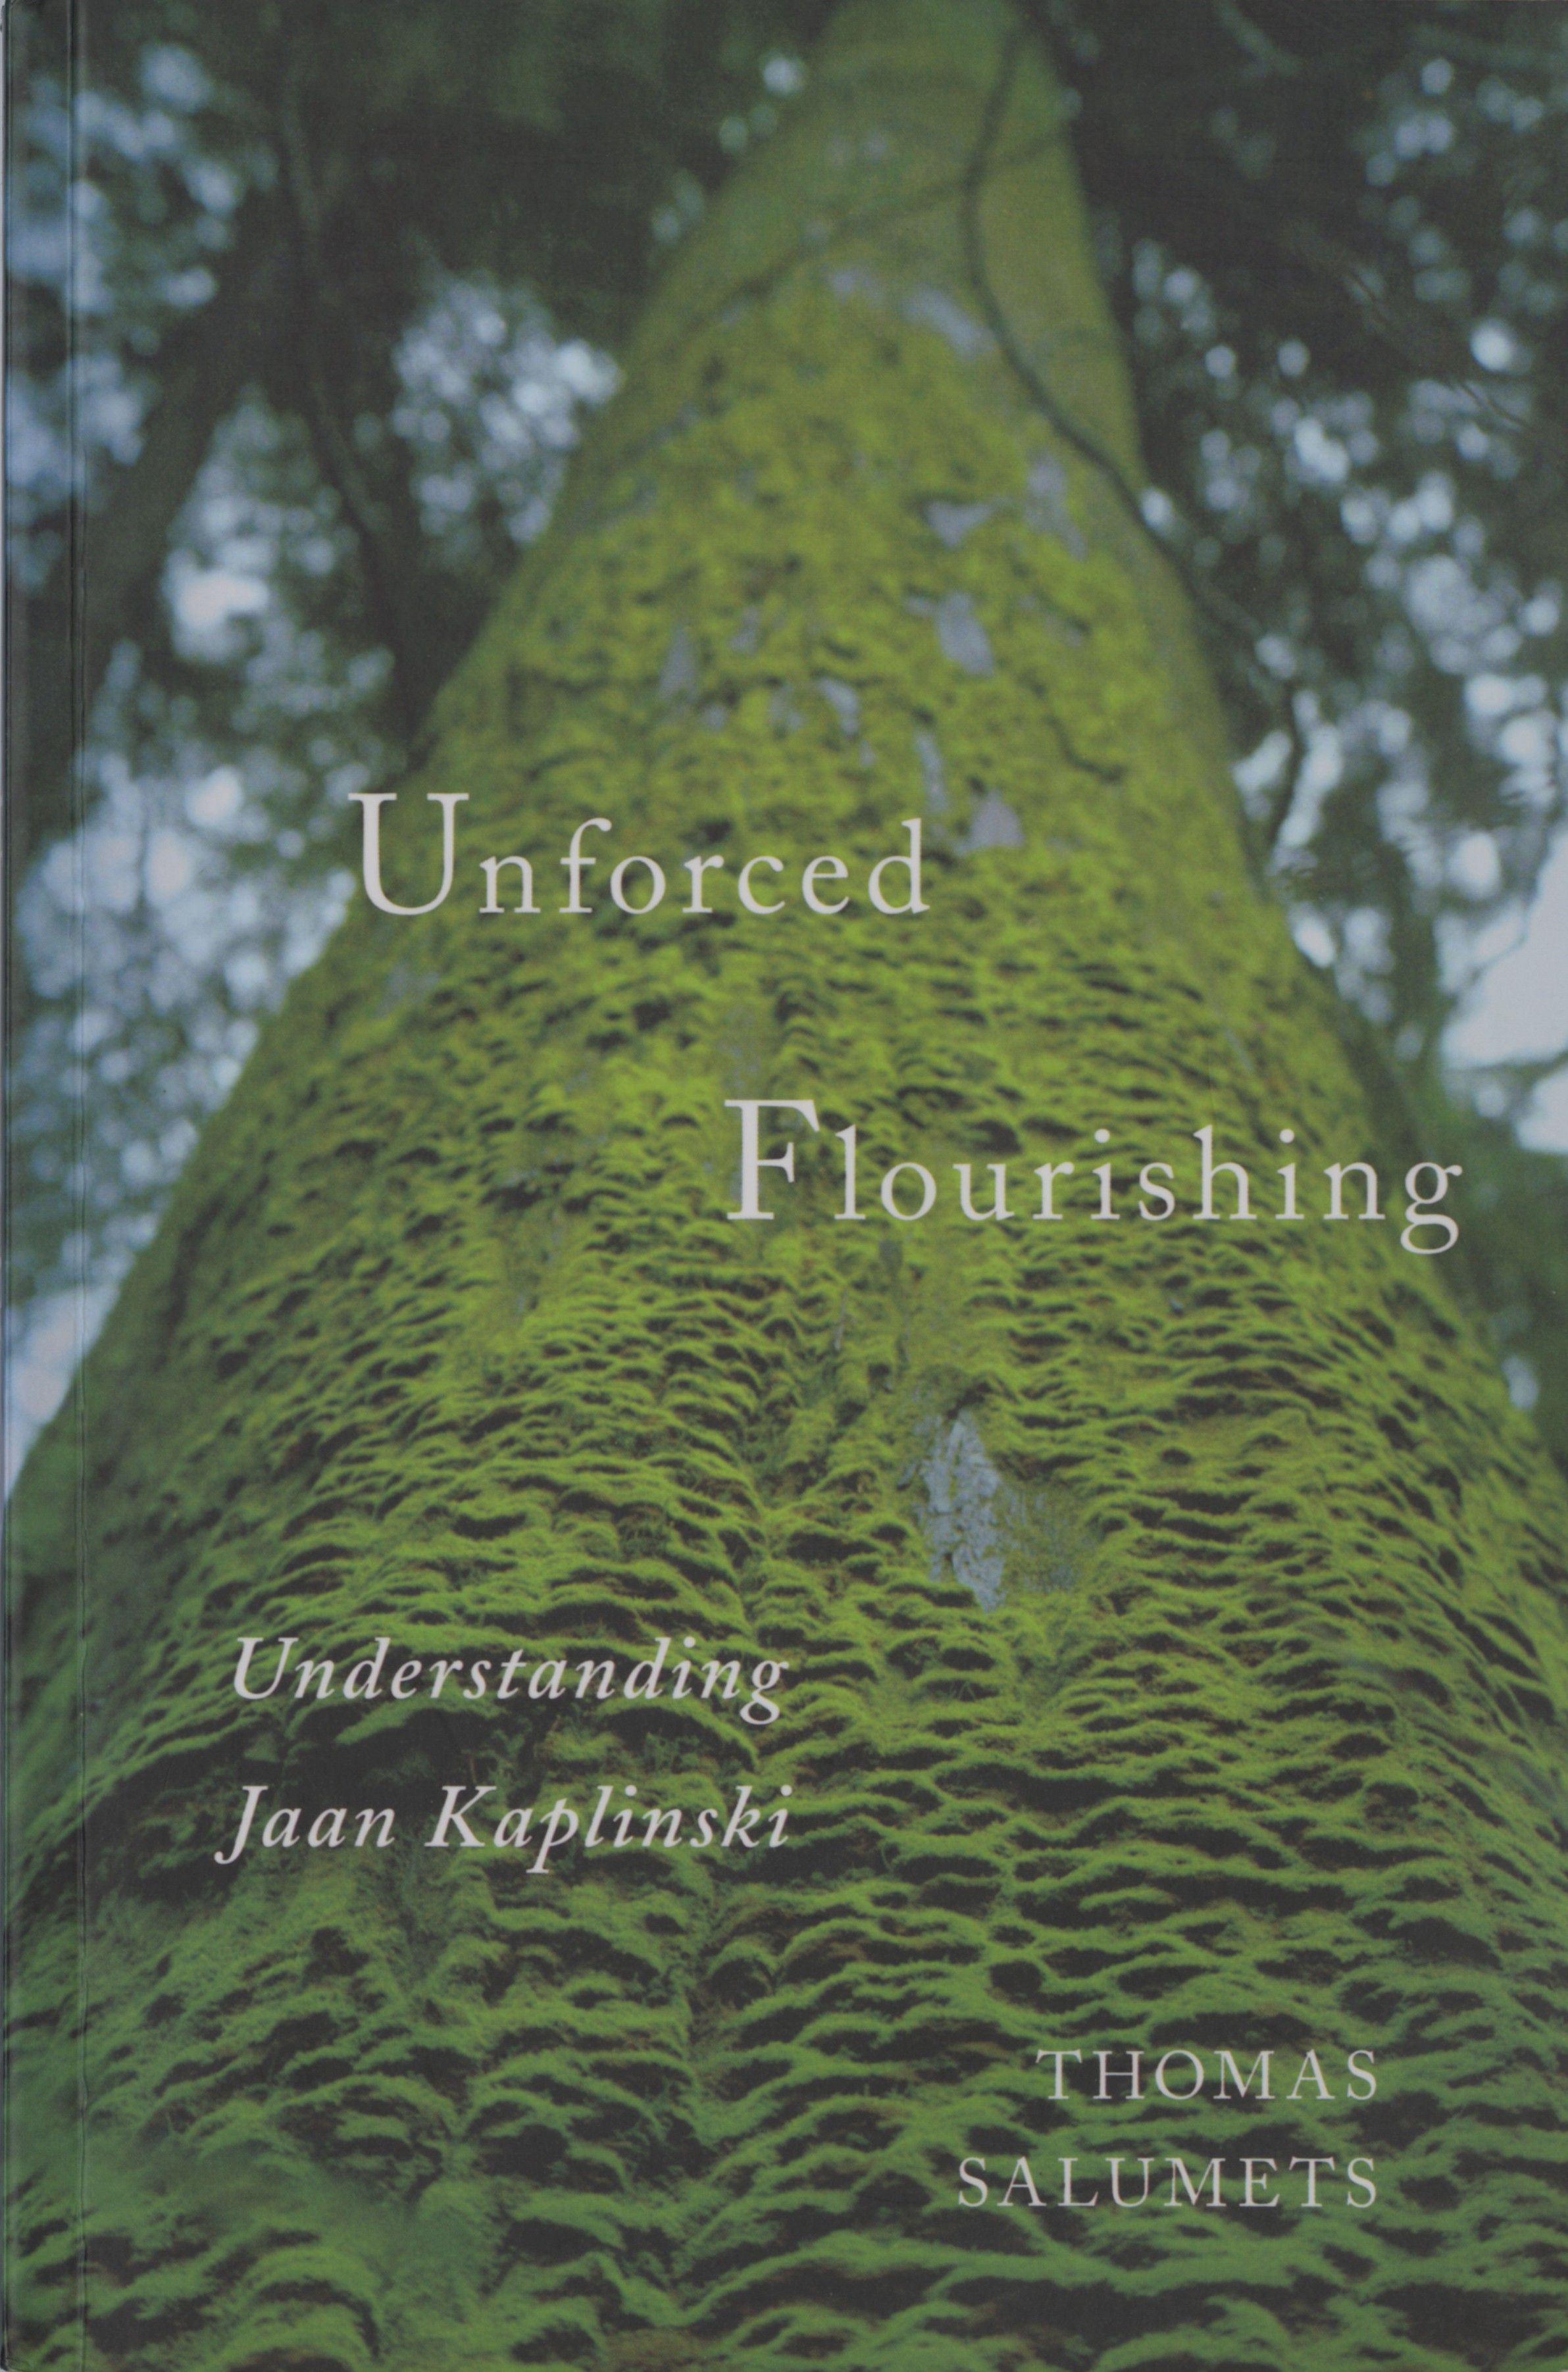 Thomas Salumets, Unforced Flourishing. Understanding Jaan Kaplinski. Montreal: McGill-Queen's University Press, 2014. 239 lk.